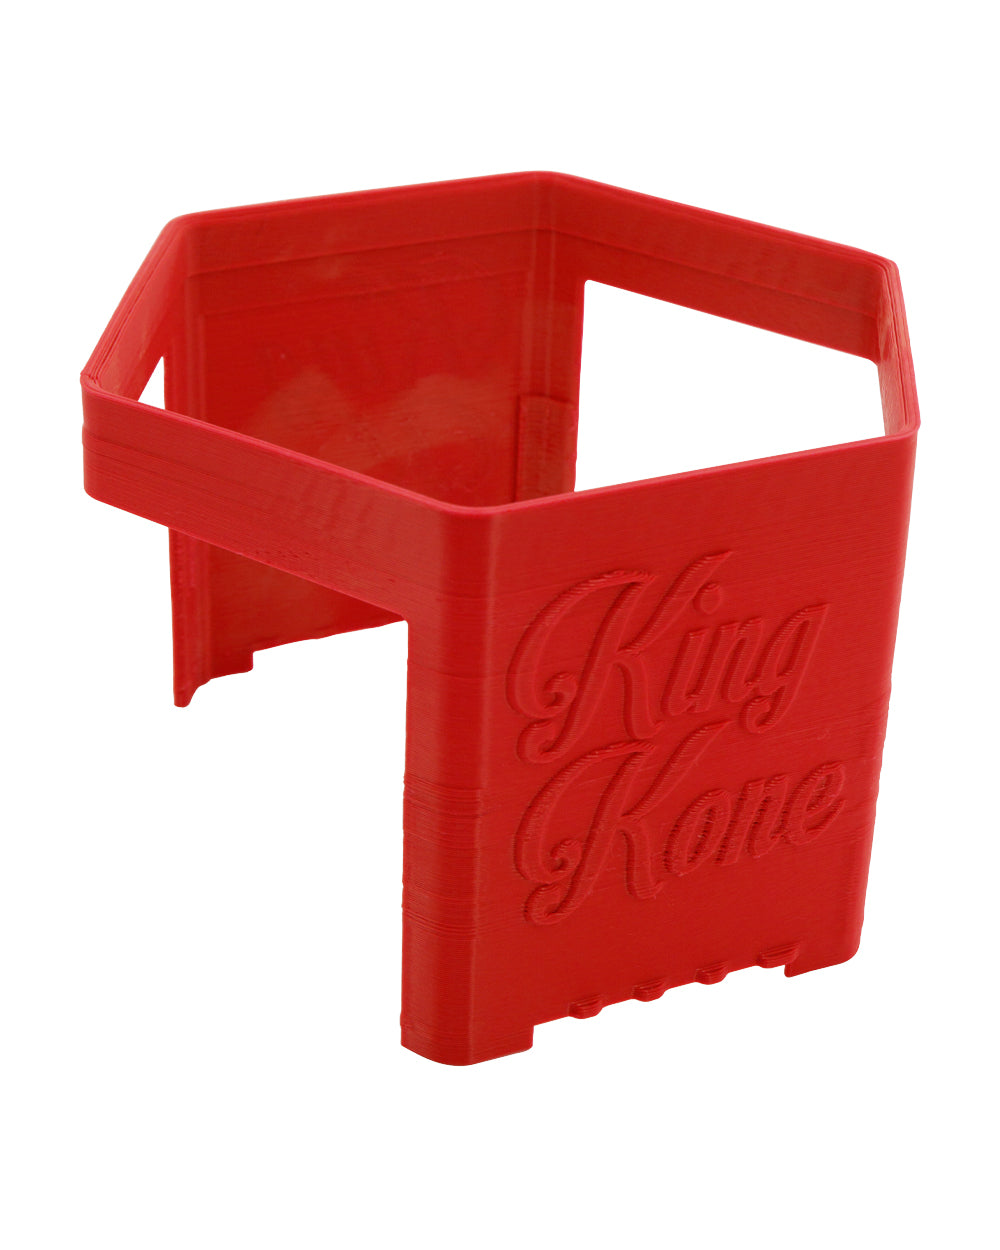 KING KONE | Red Vibration Pre-Rolled Cones Filling Machine 84/98/109mm | Fill 169 Cones Per Run - 5